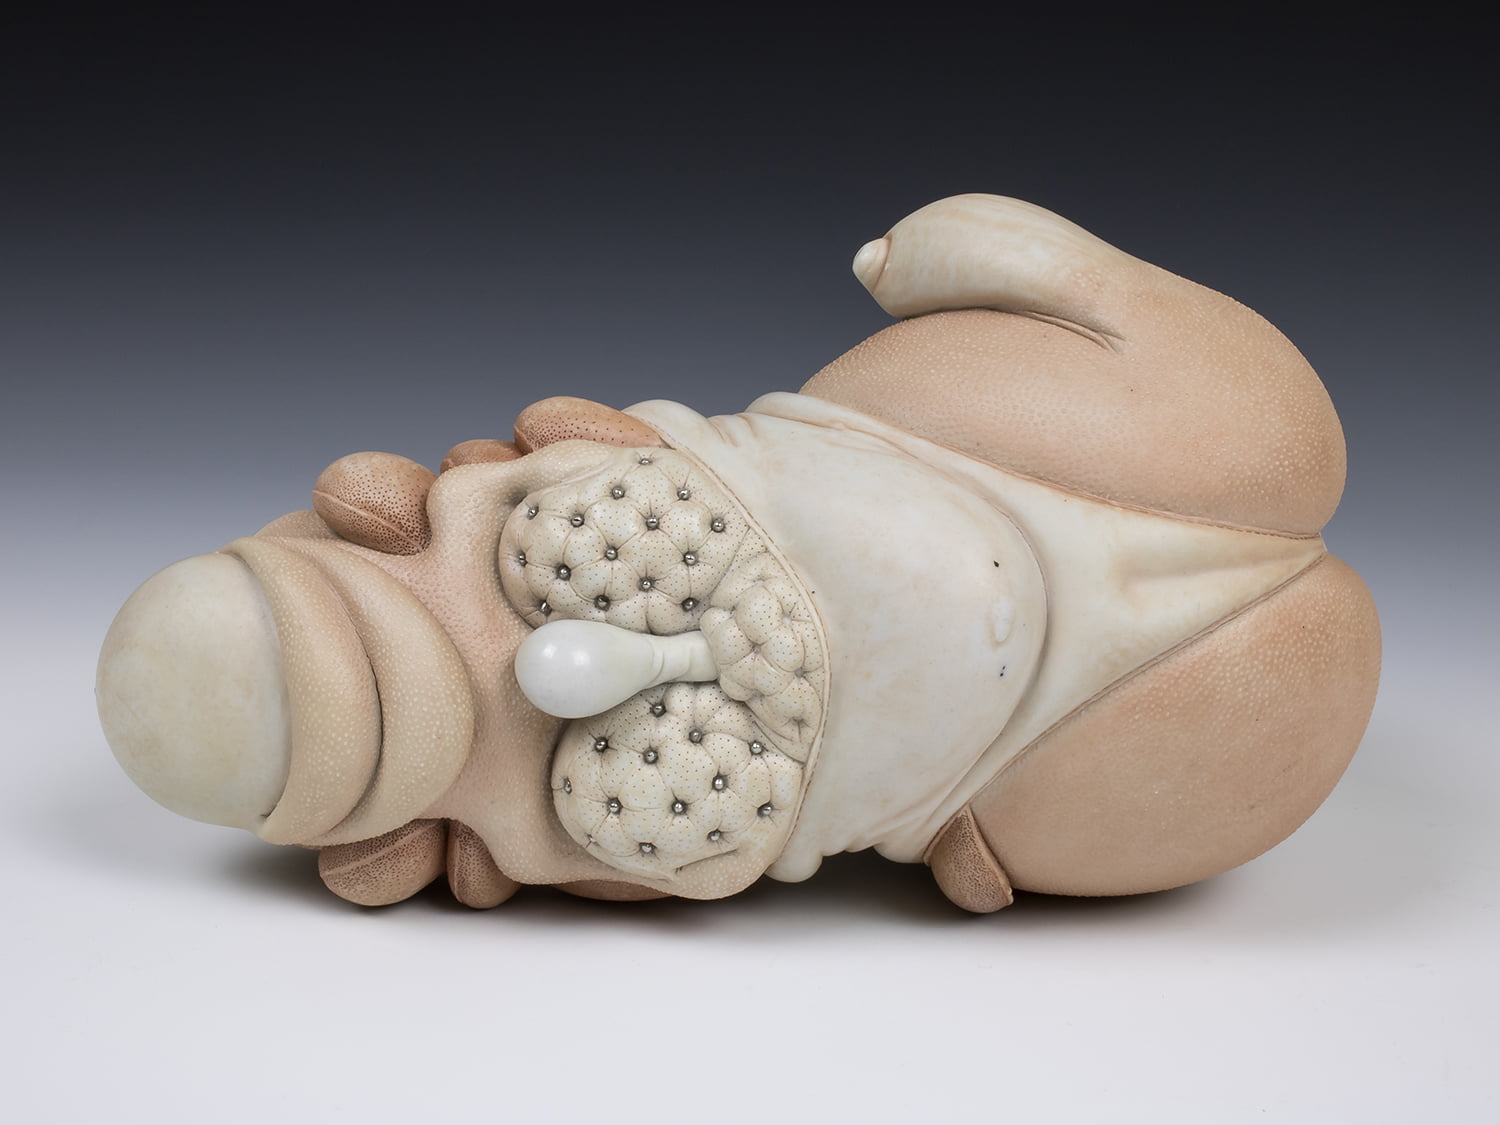 Jason Briggs "Strut" (alternate view 2). porcelain, hair, and mixed media sculpture ceramics.